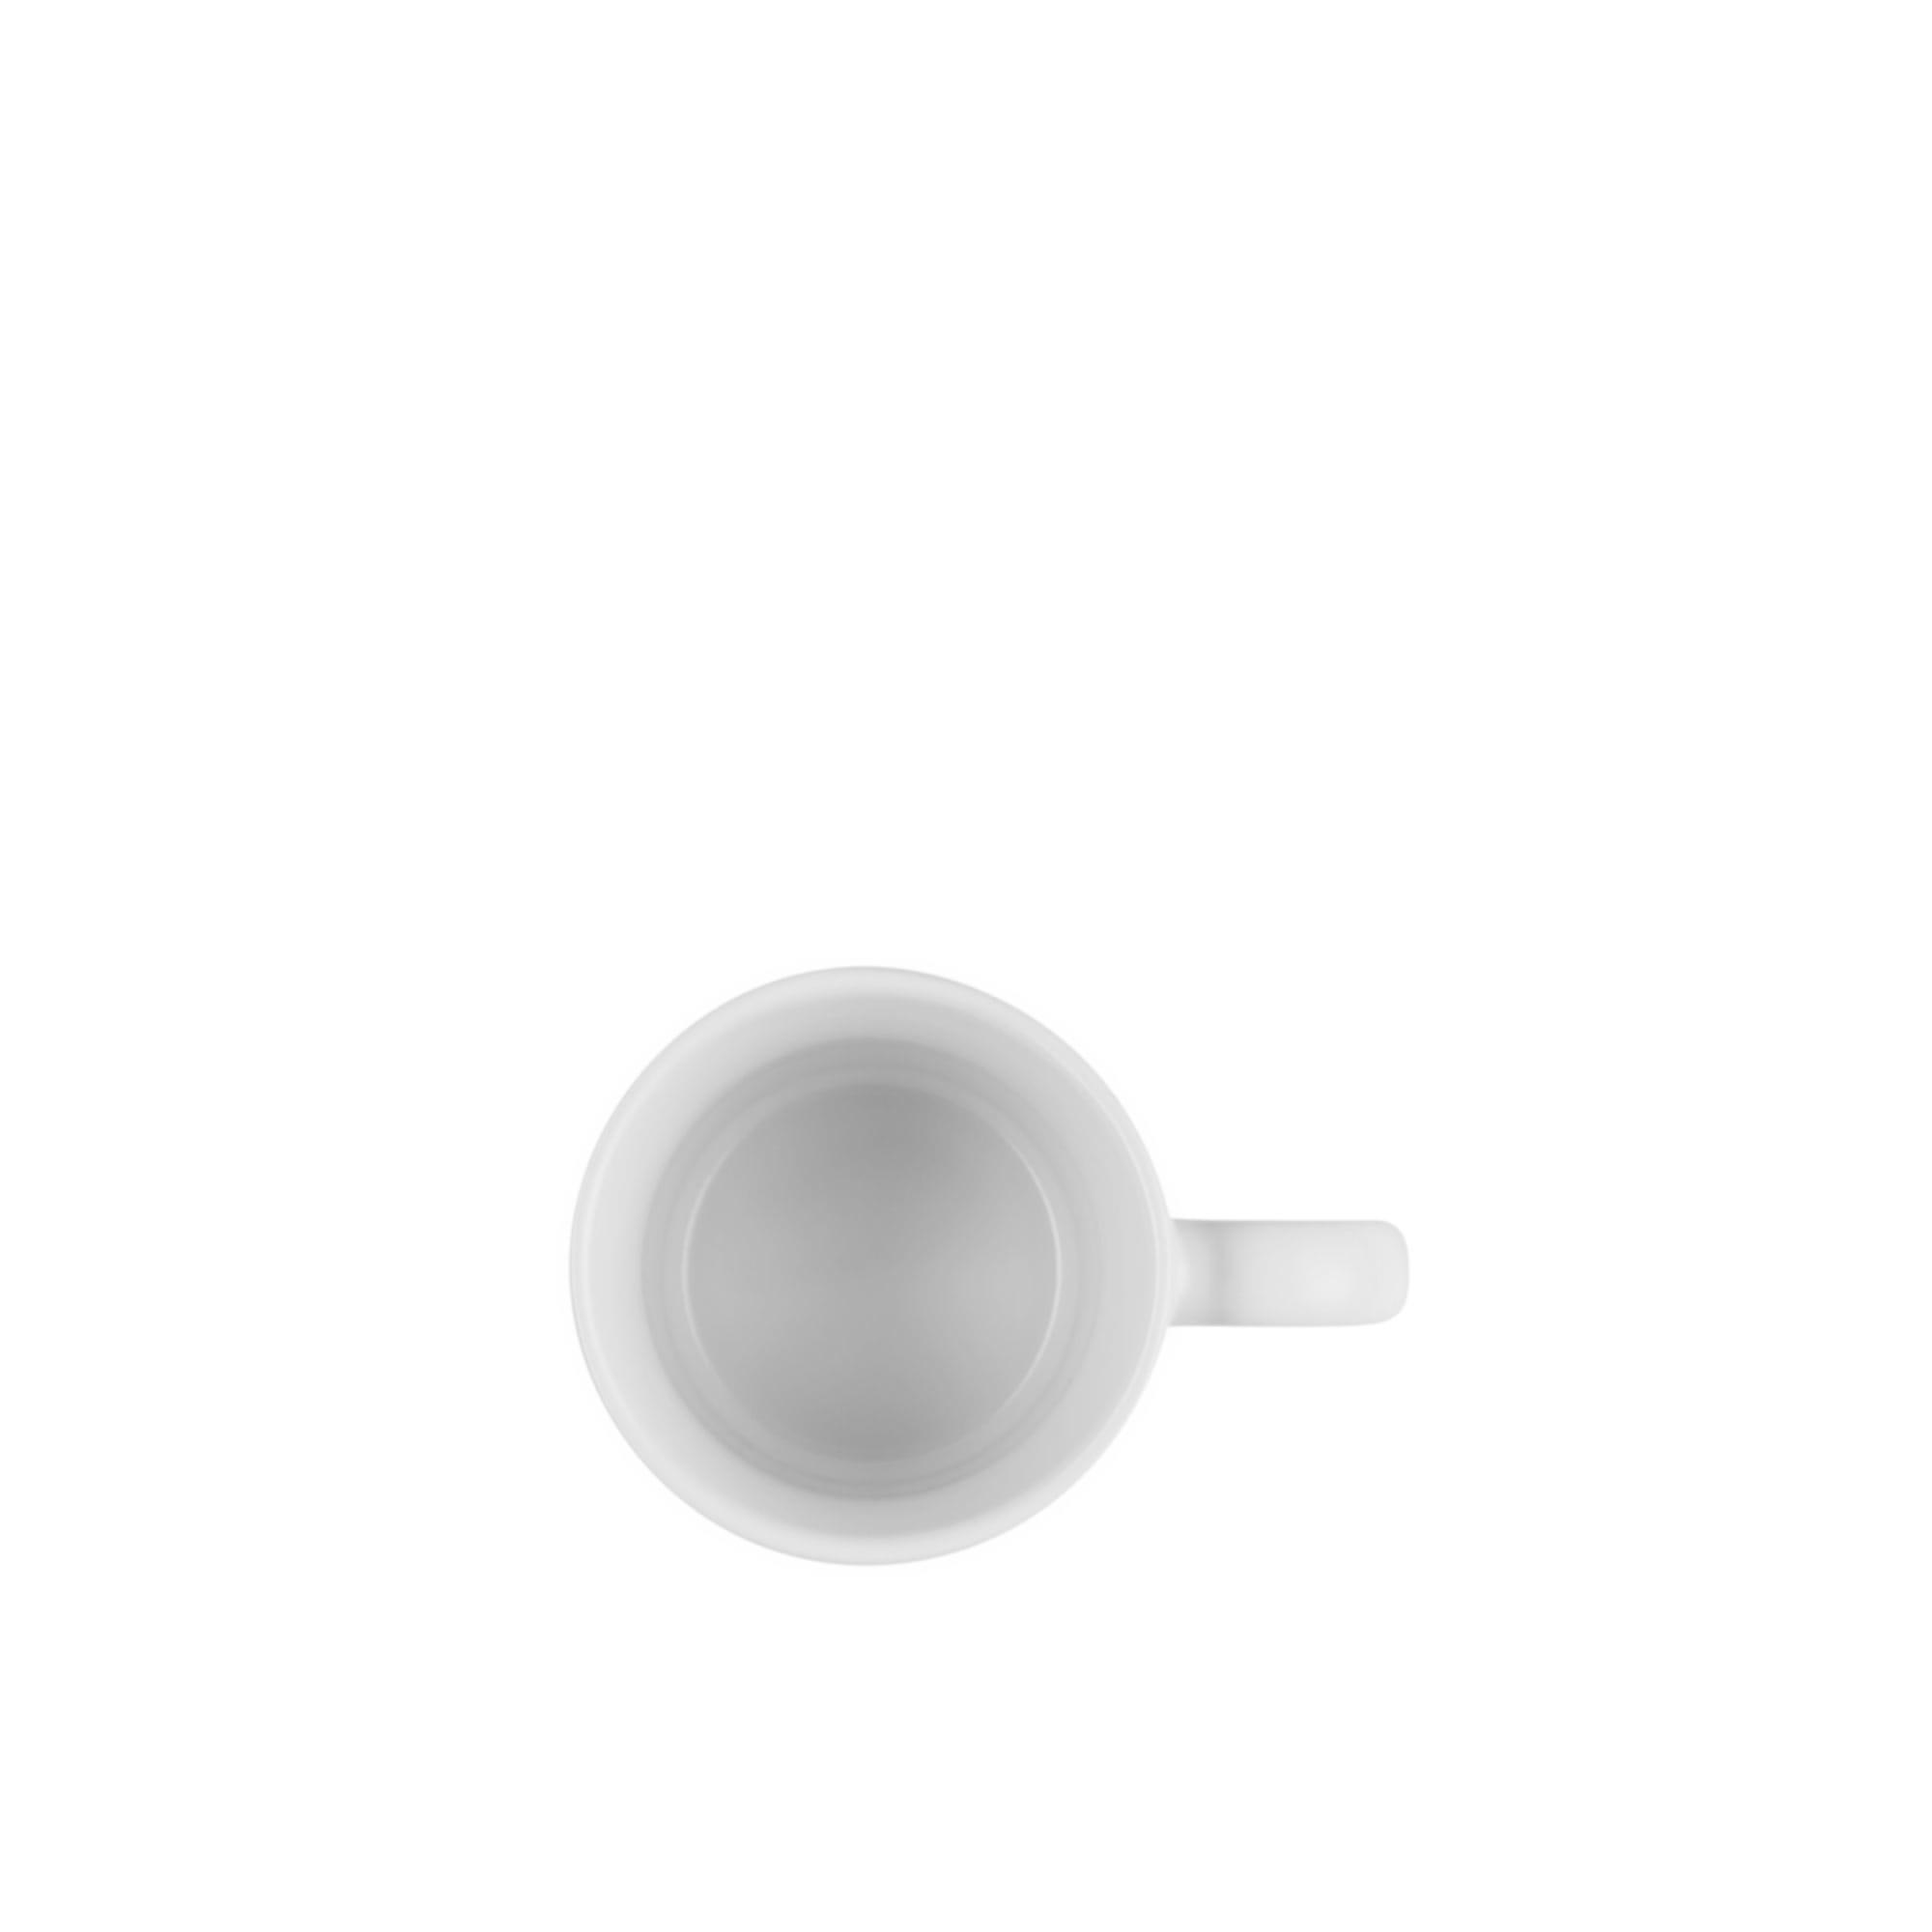 Le Creuset Stoneware Espresso Mug 100ml White Image 4